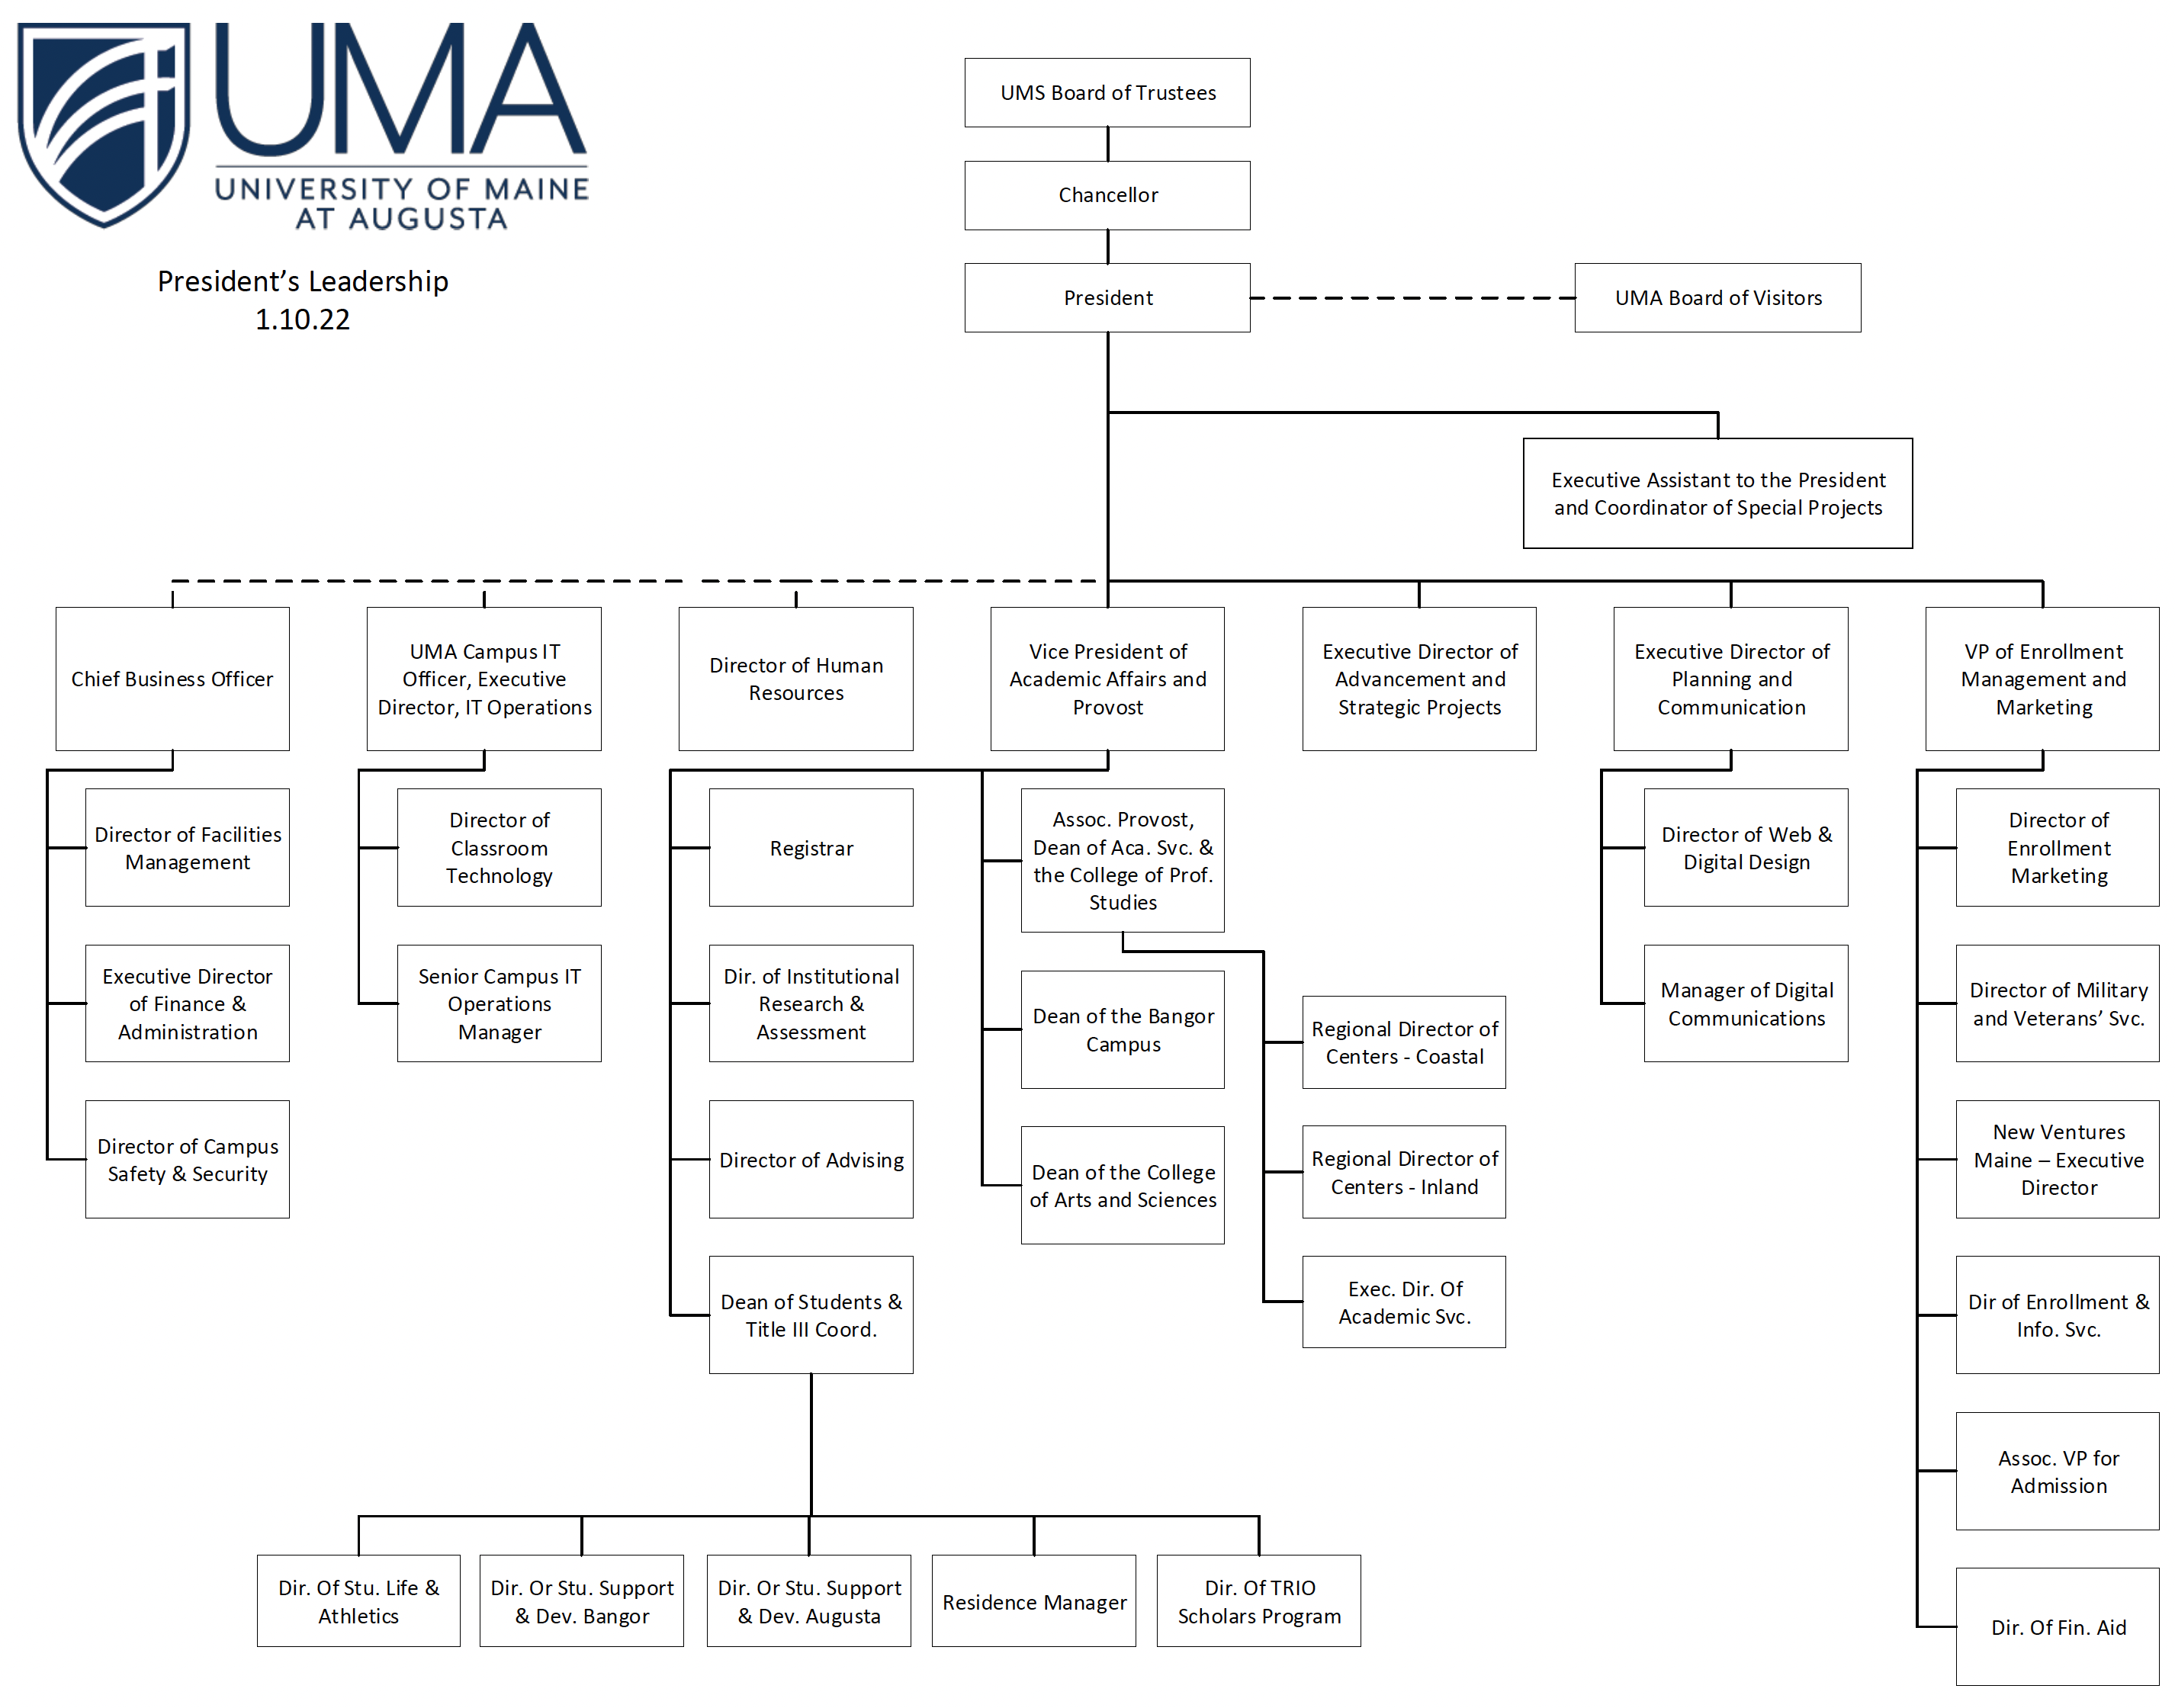 University of Maine at Augusta (UMA) Organizational Chart image